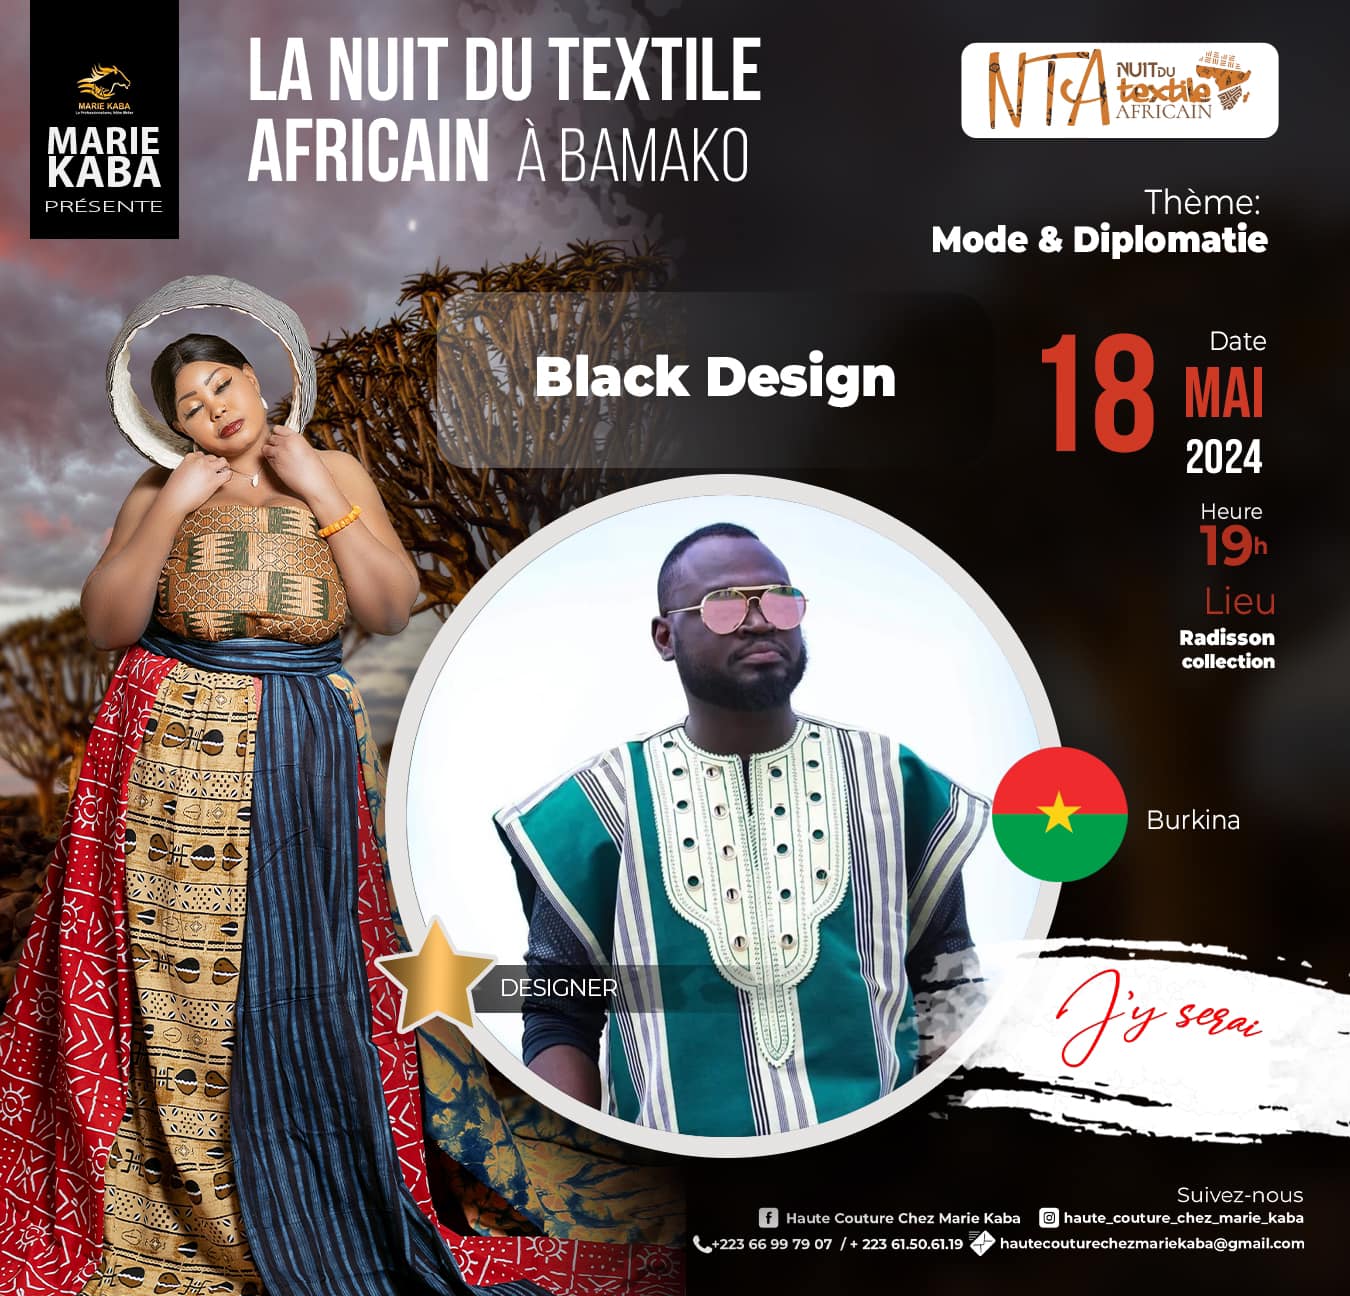 LA NUIT DU TEXTILE AFRICAIN A BAMAKO presents Black Design from  Burkina